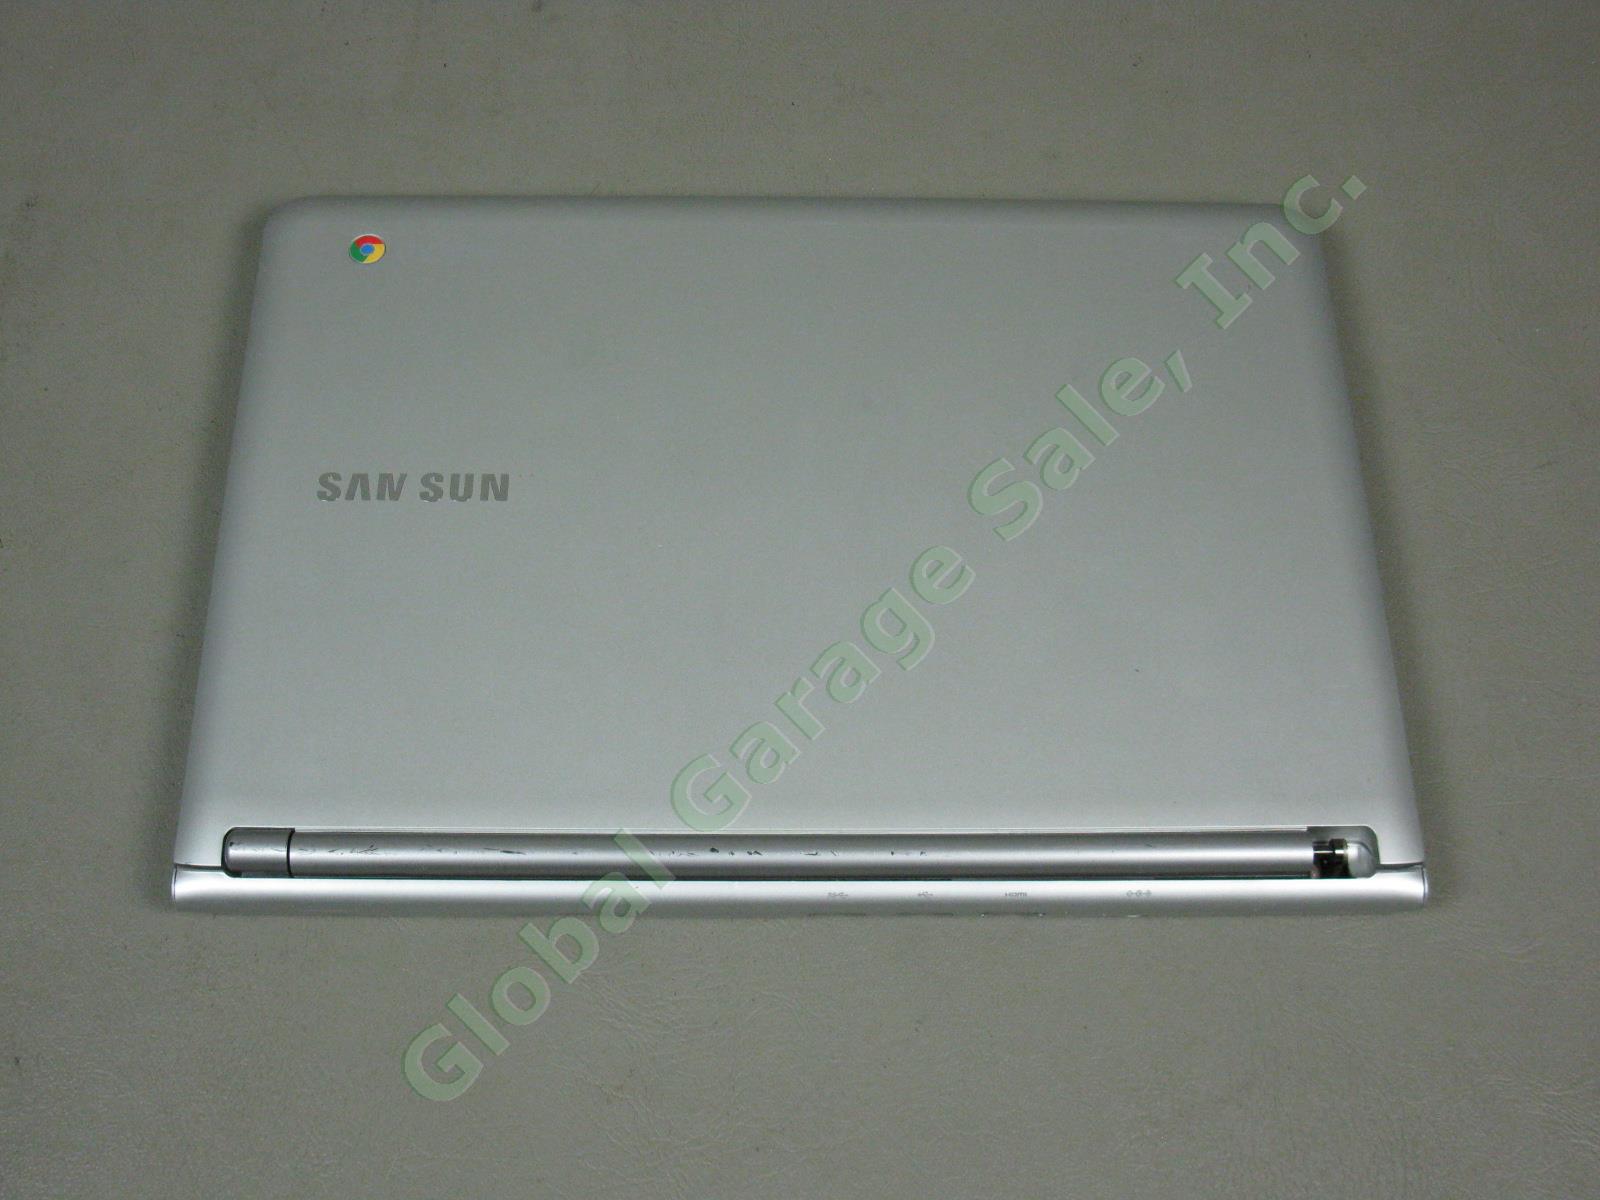 Samsung Chromebook Chrome Netbook Computer XE303C12 11.6" 1.7 GHz 2GB RAM 16GB 3